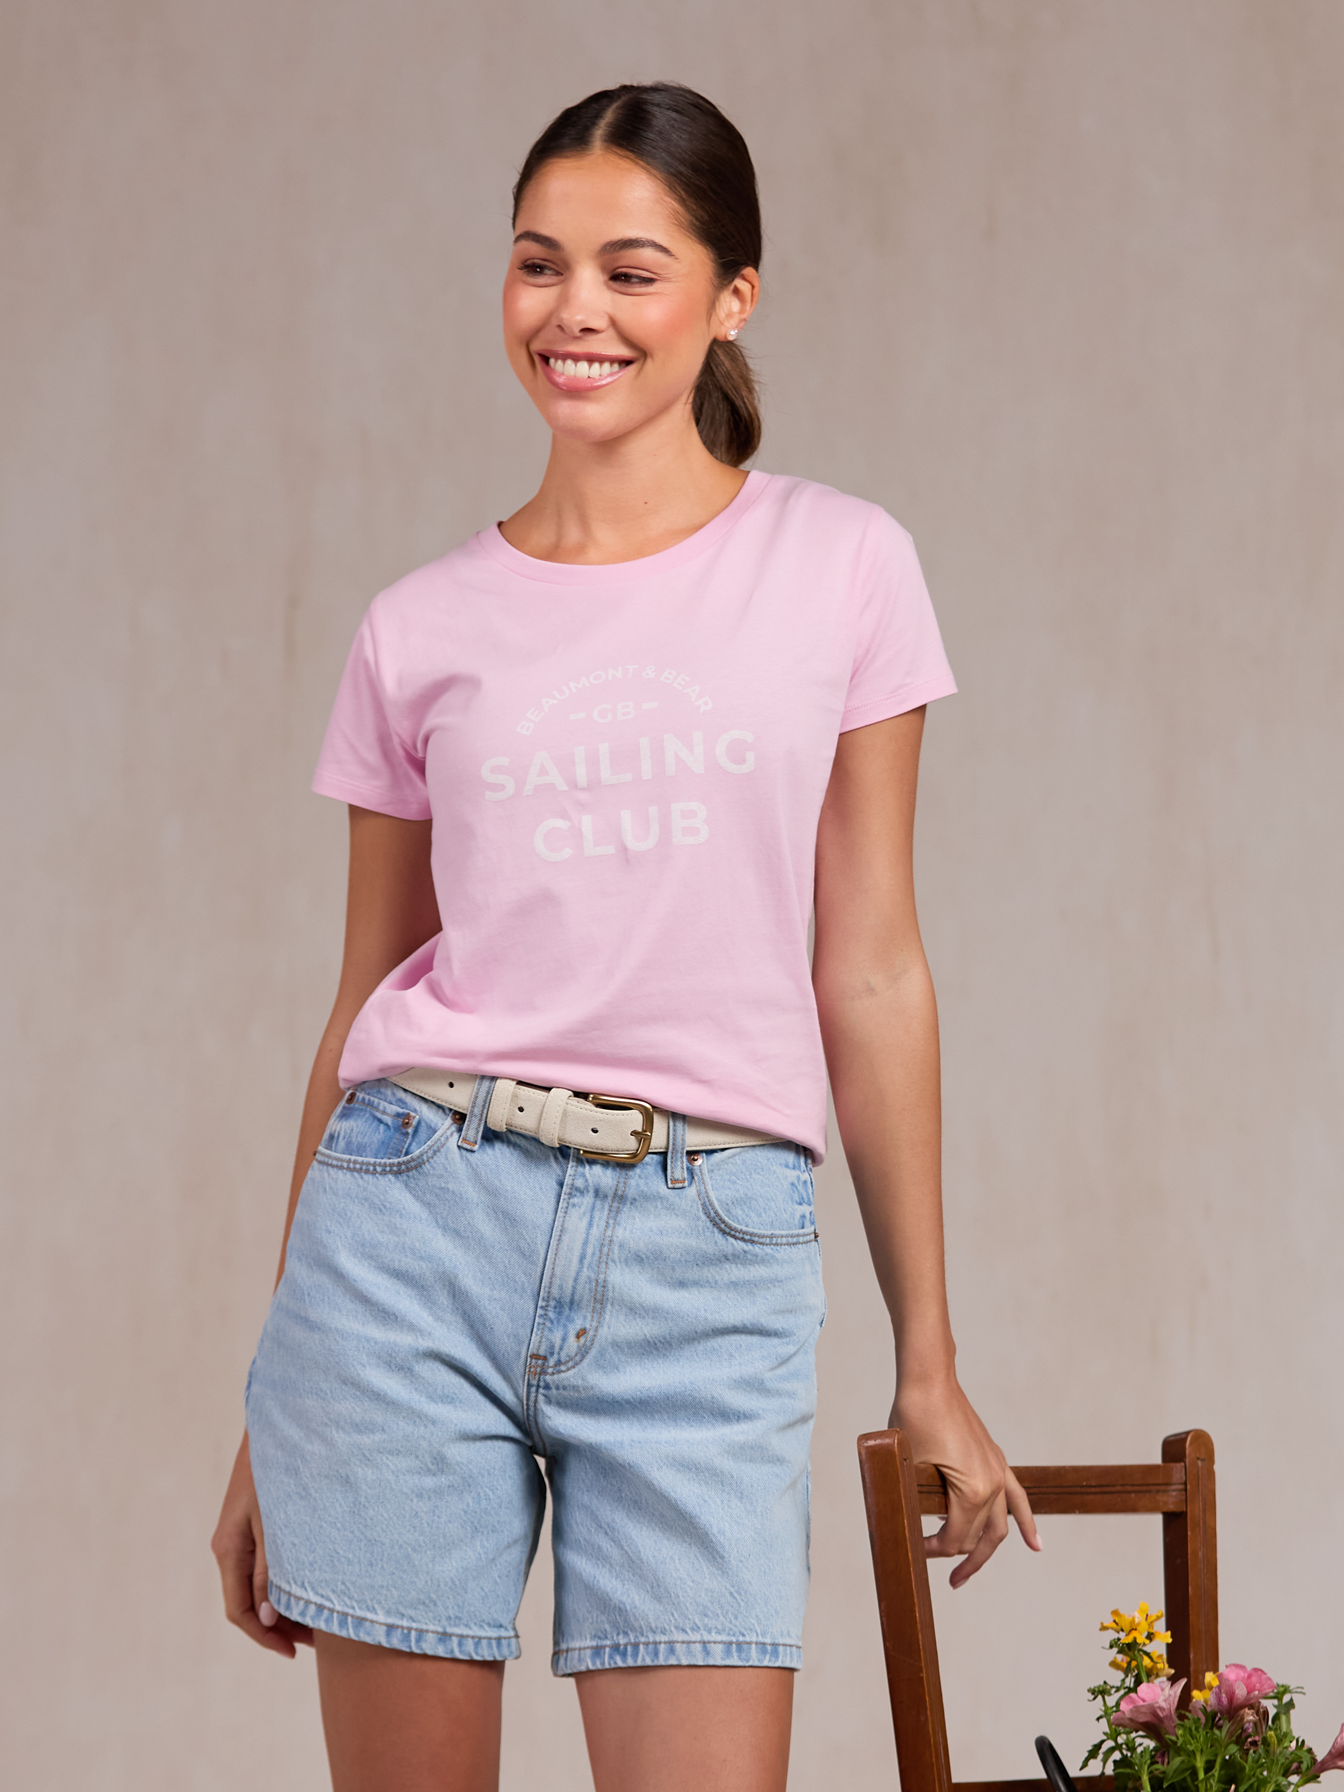 Sailing Club Women's T-Shirt - Pink